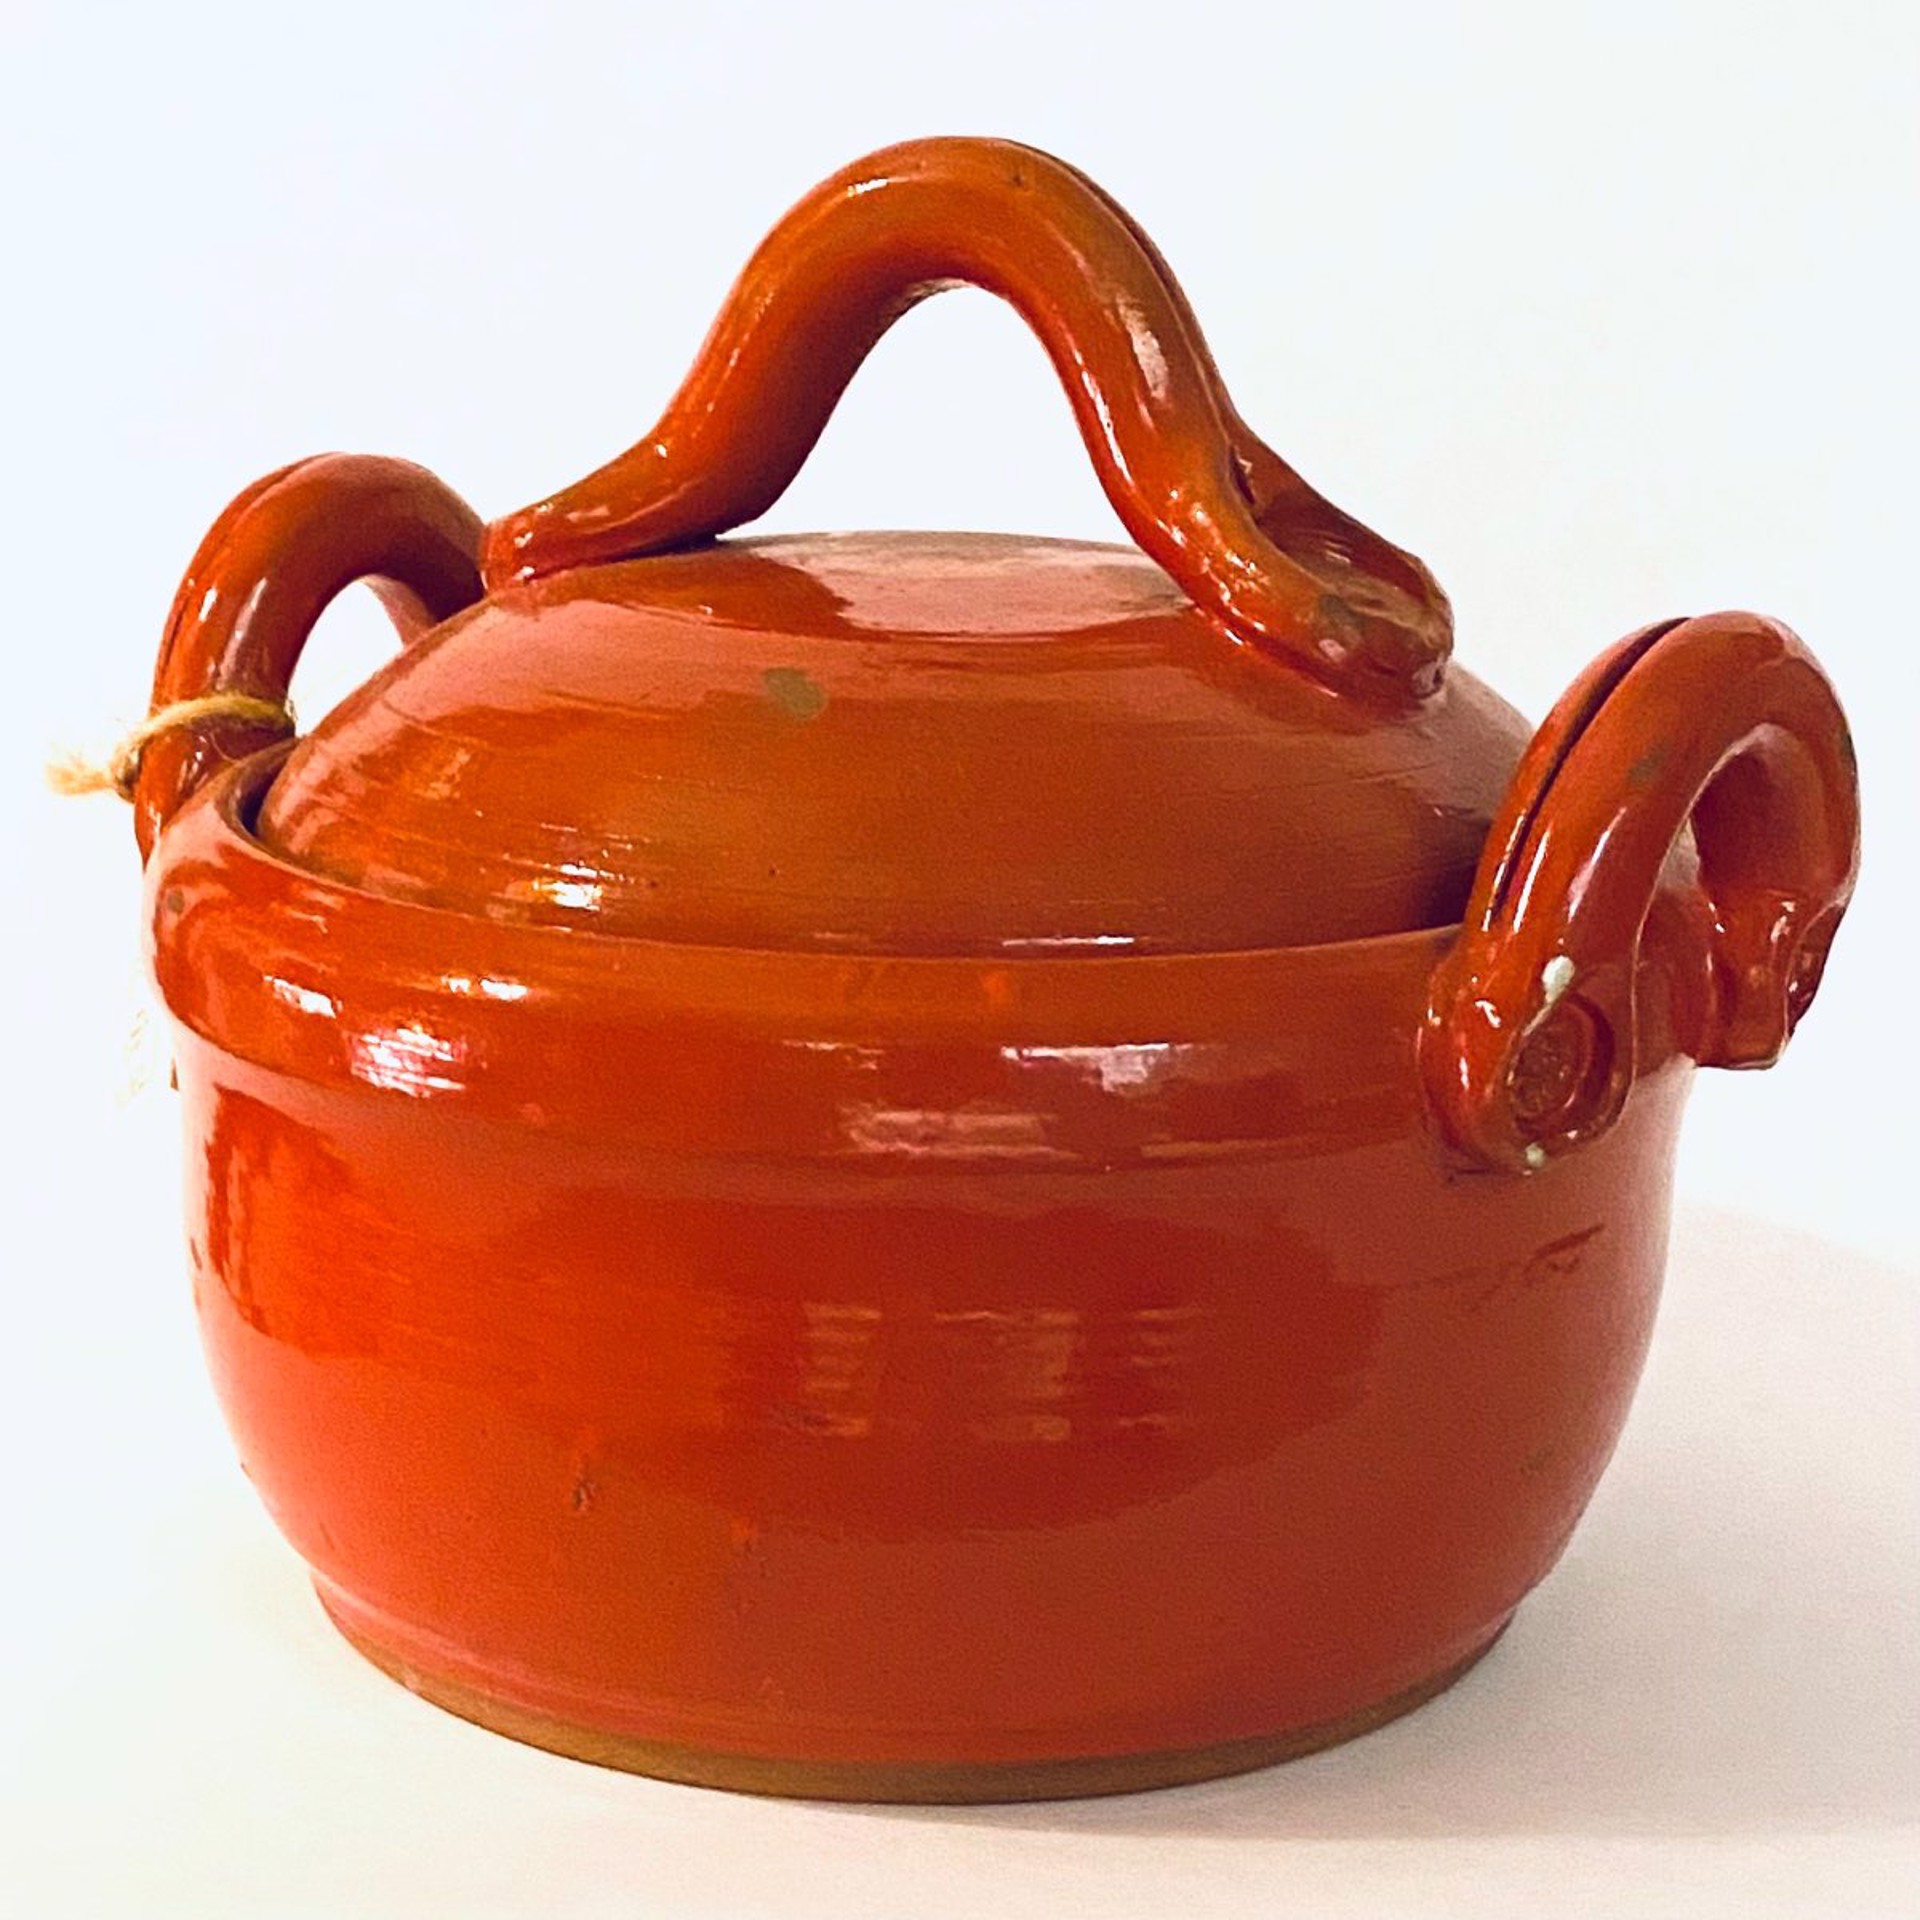 JJ22-3 Blood Orange Lidded Stew Pot with Handles by Jim Jones